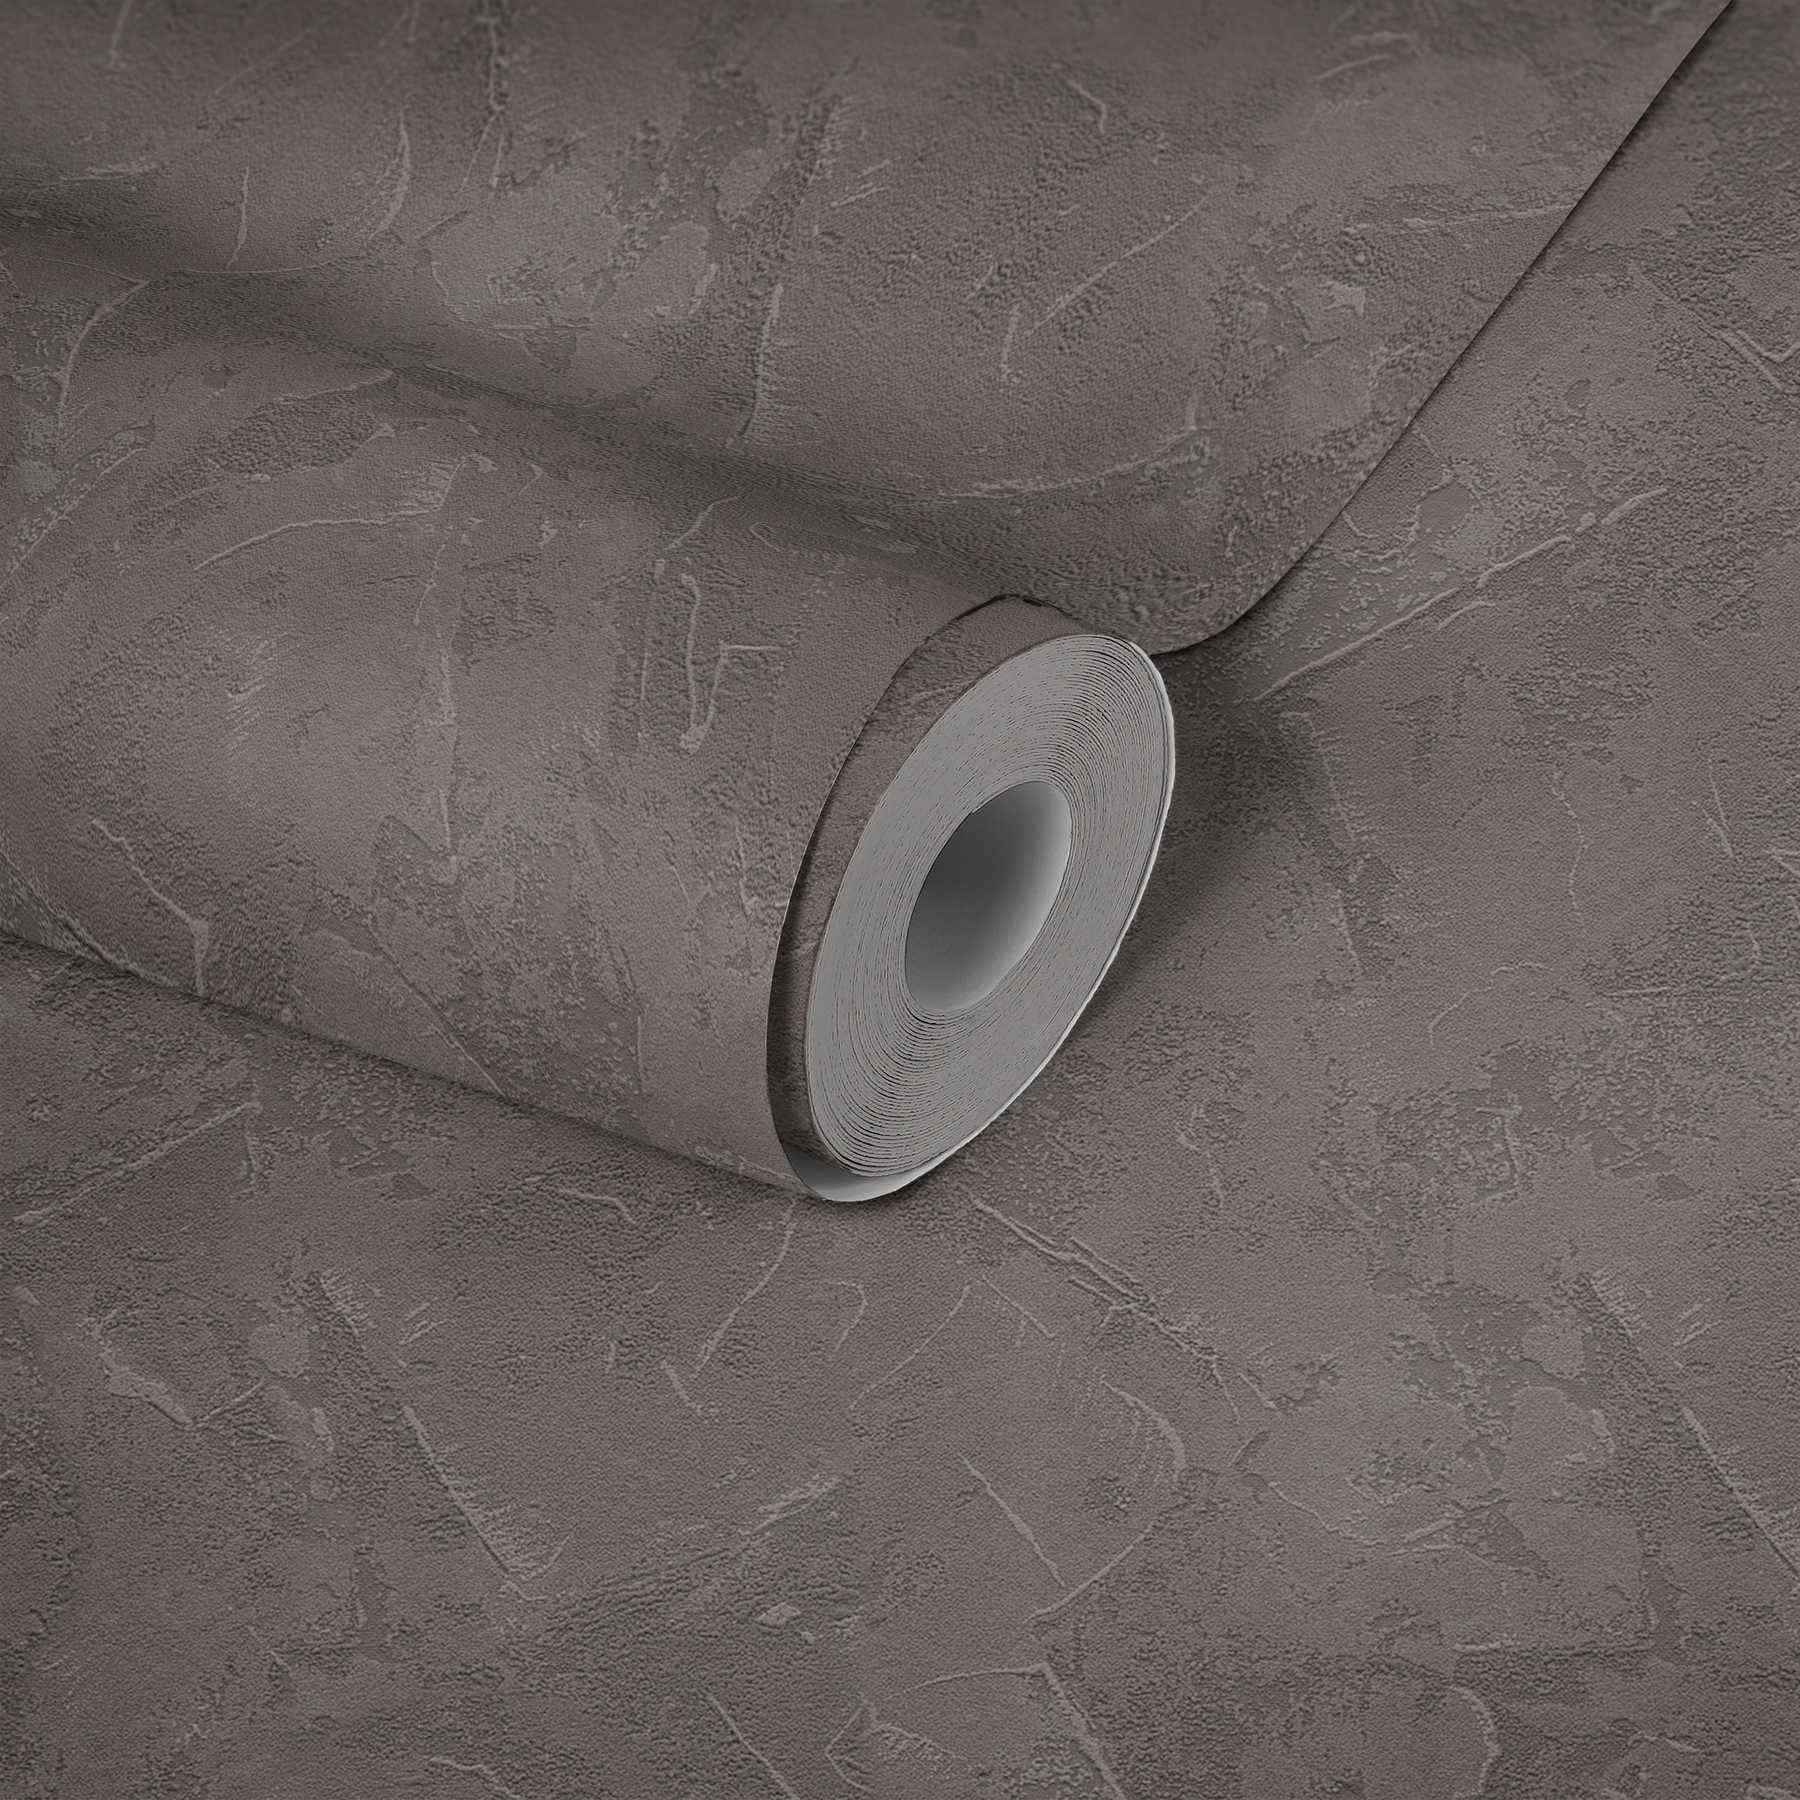             Plaster look wallpaper grey trowel plaster design in rustic style
        